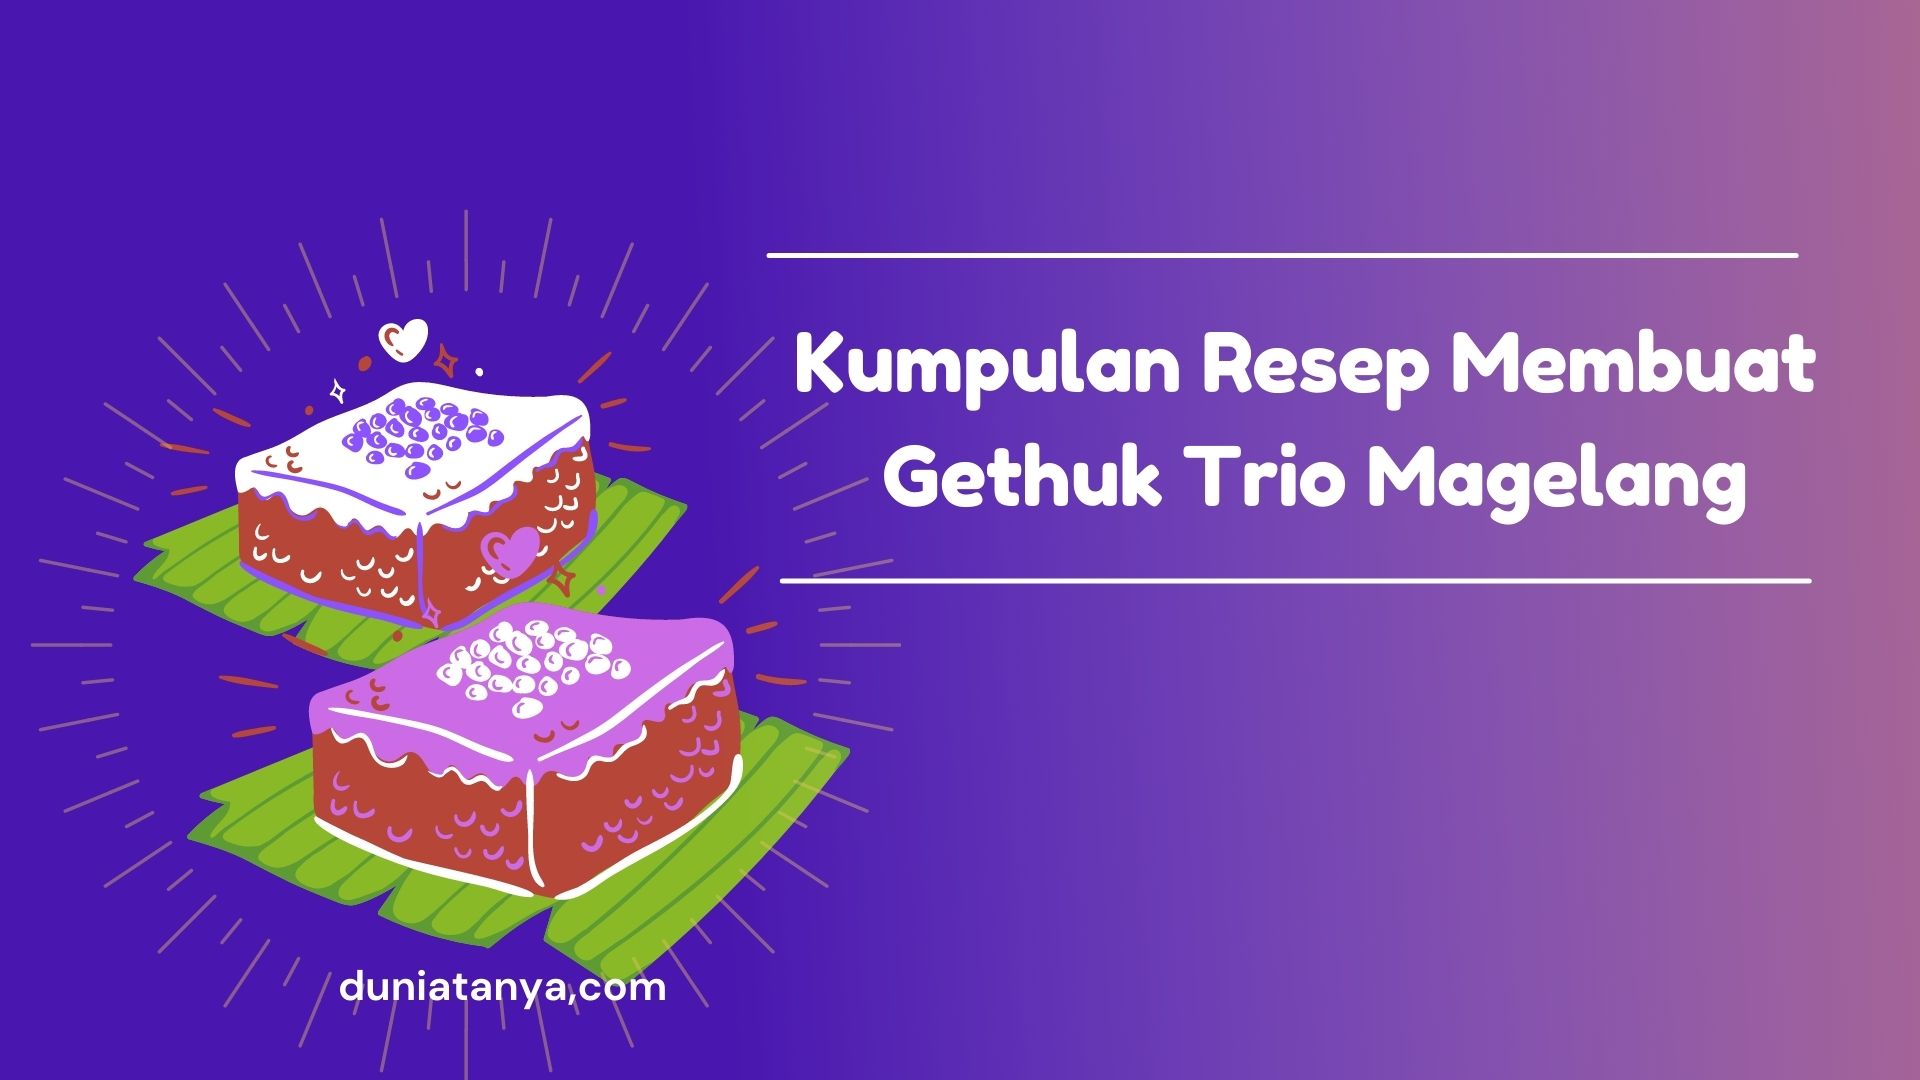 You are currently viewing Kumpulan Resep Membuat Gethuk Trio Magelang